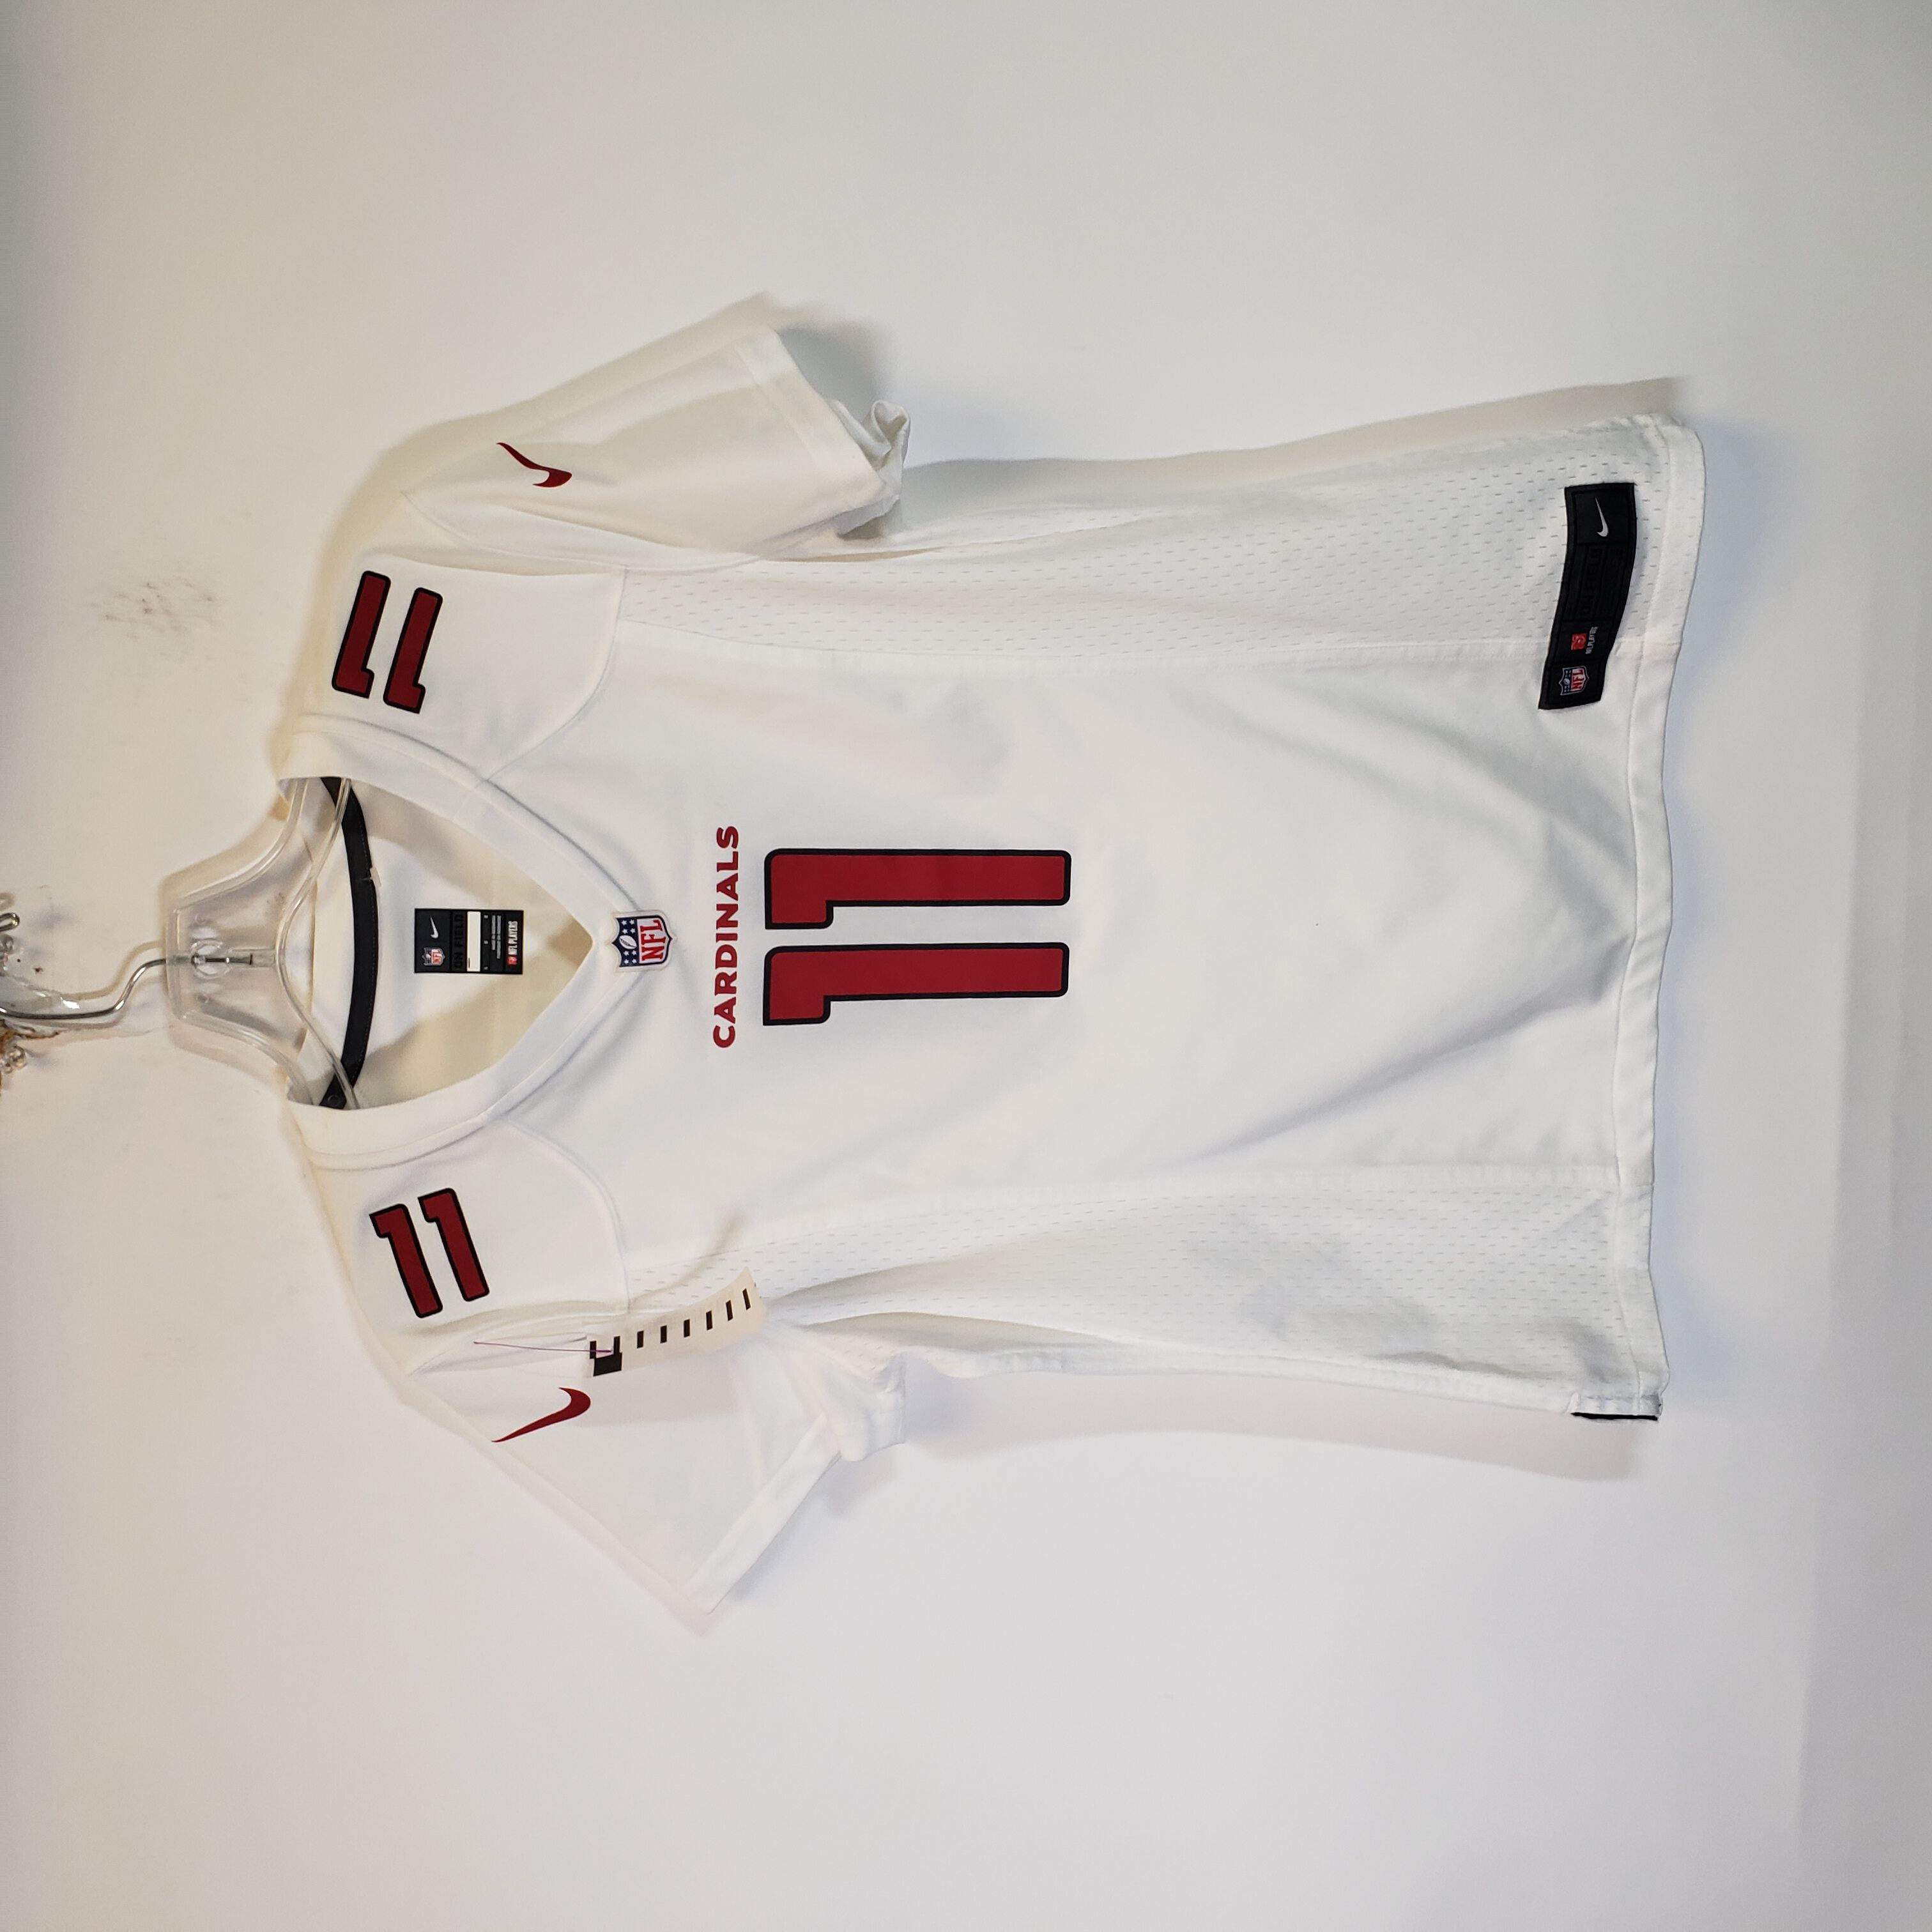 larry fitzgerald jersey white